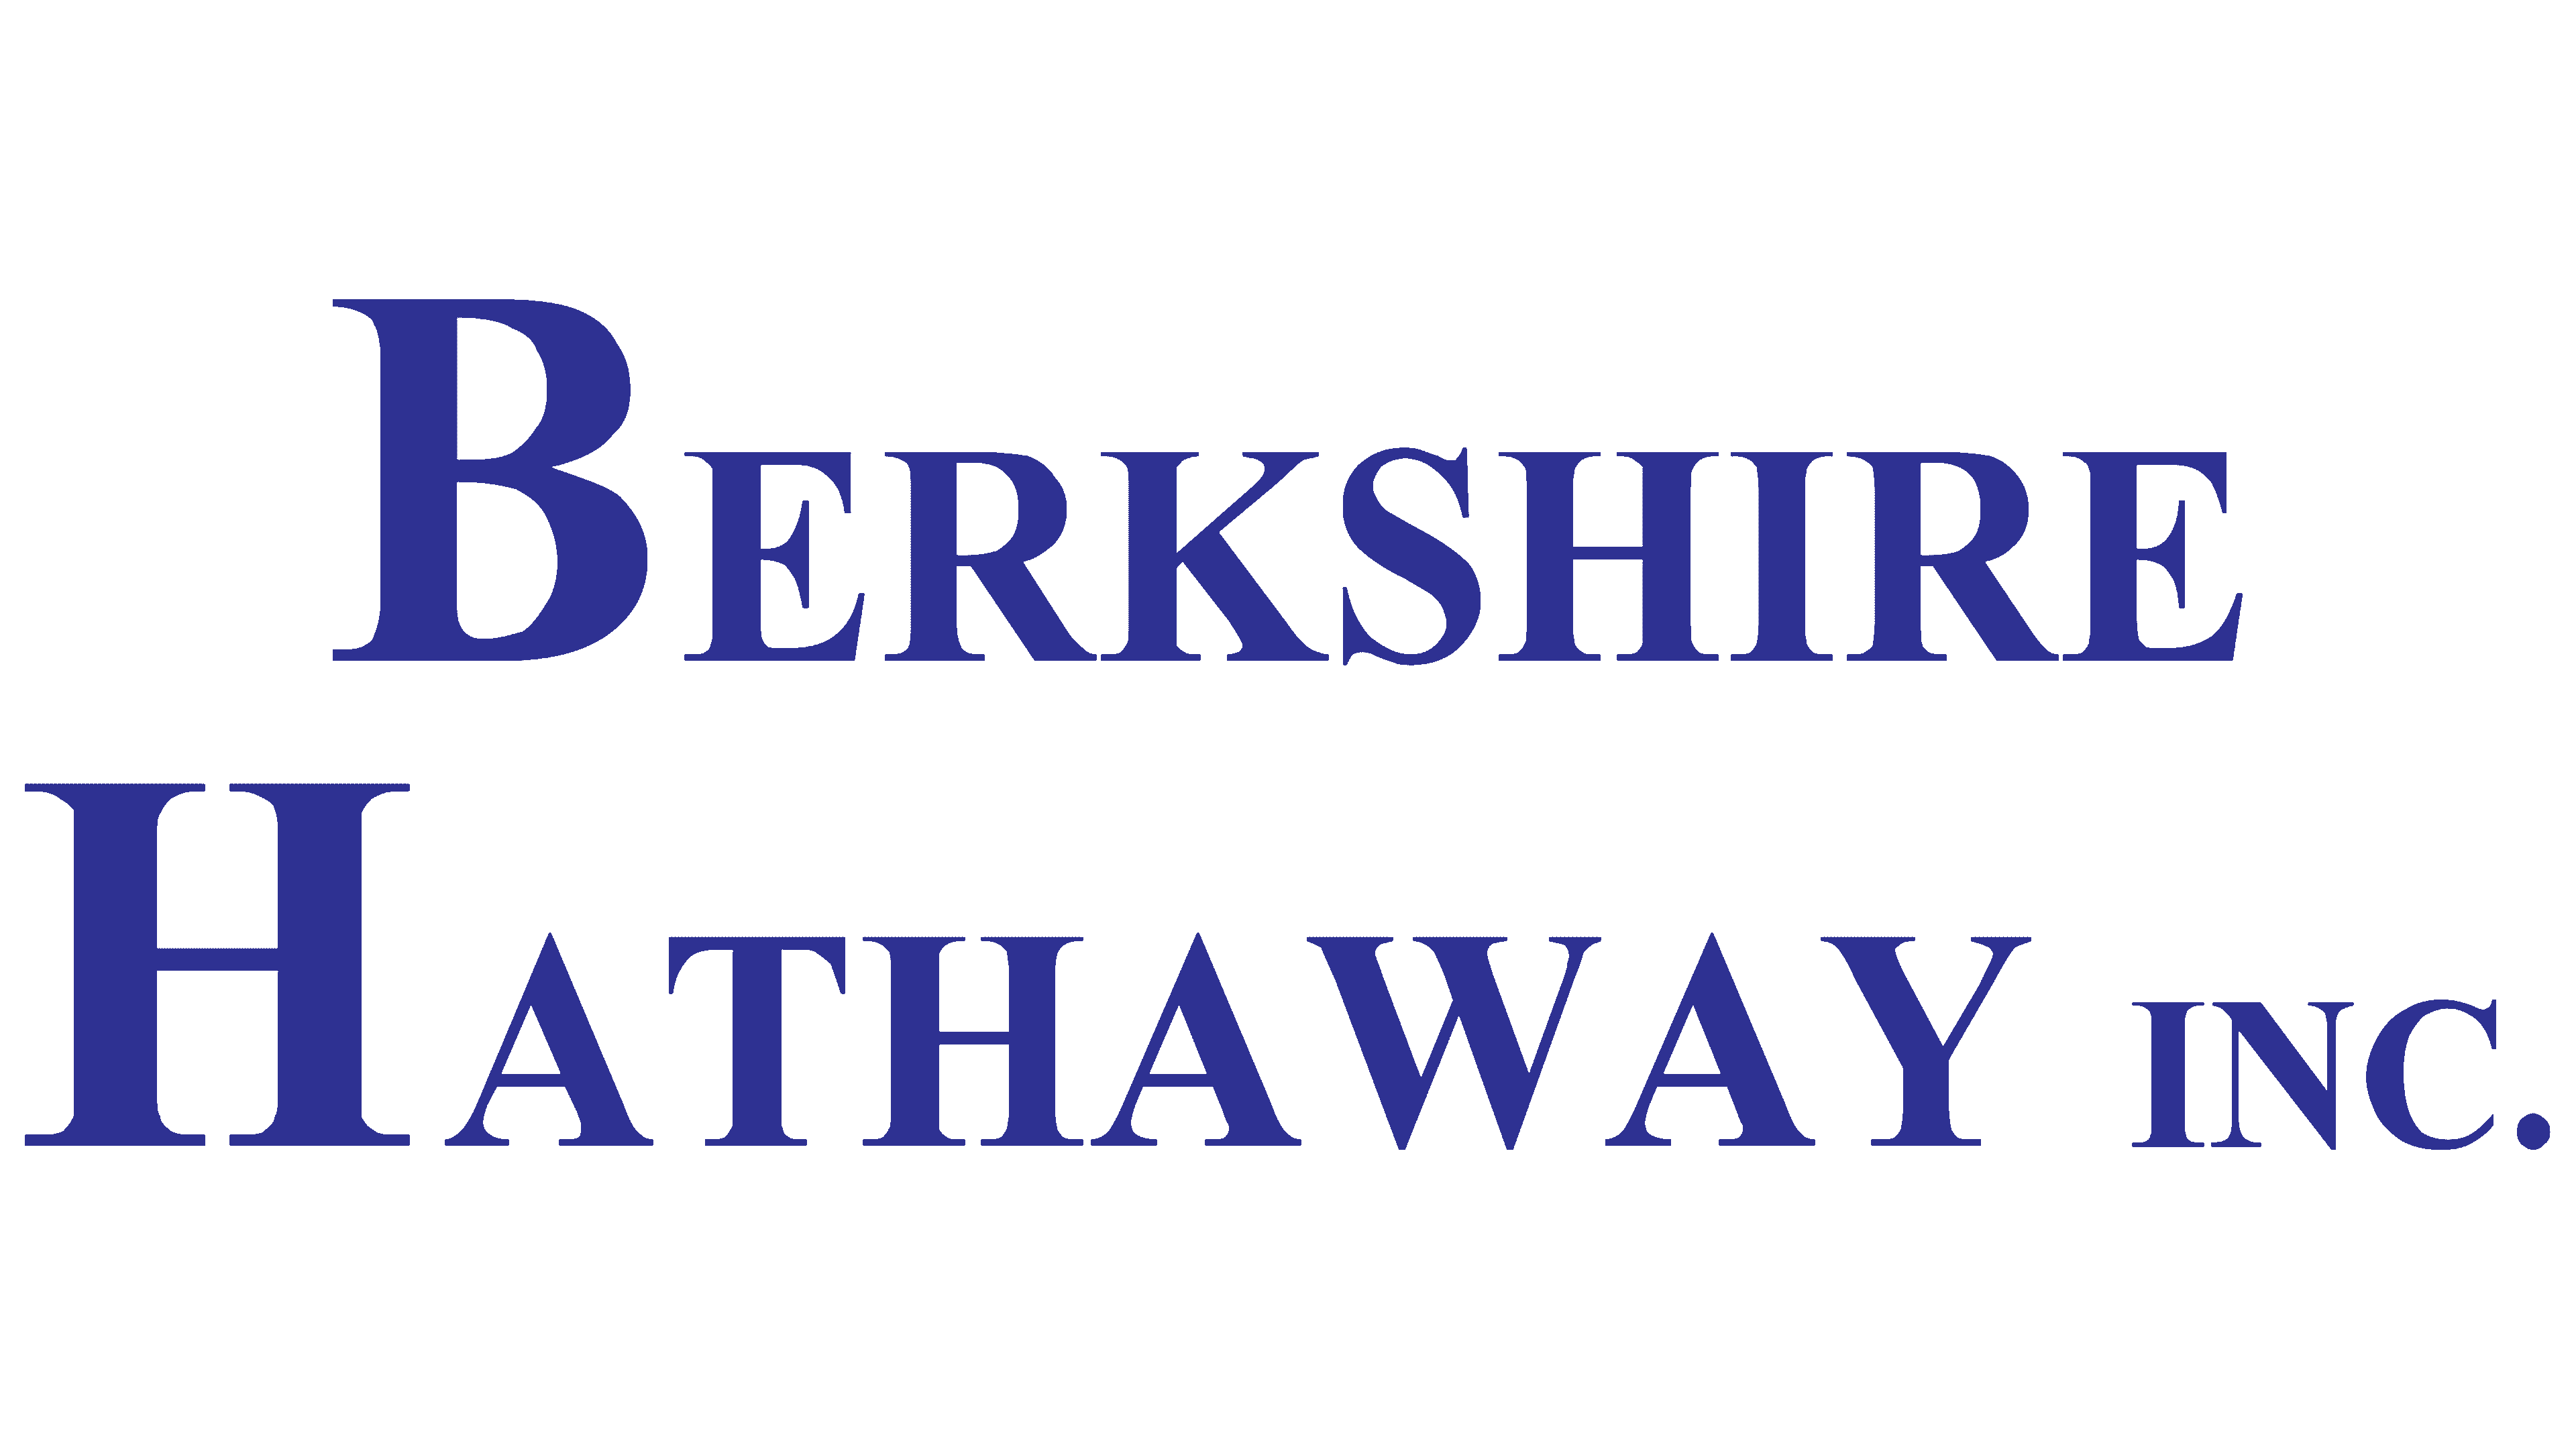 Berkshire Hathaway boykot